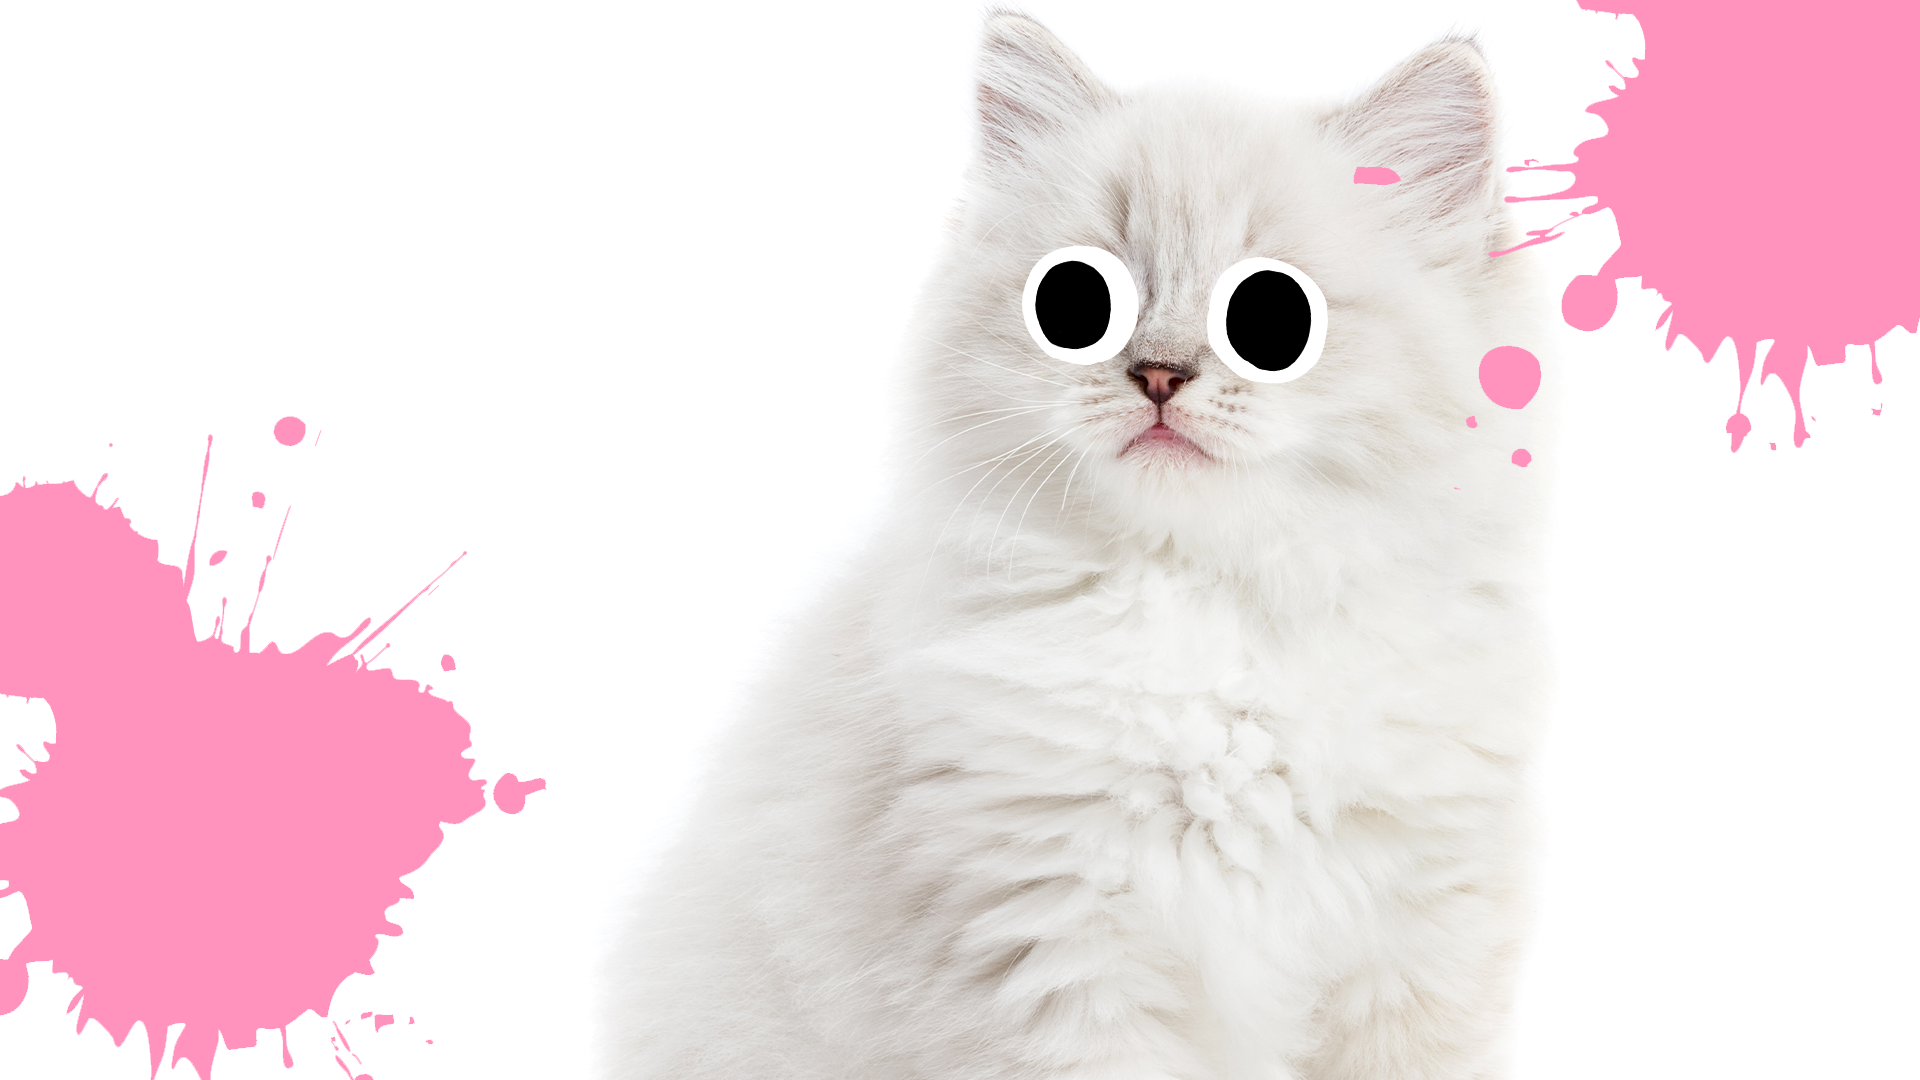 A cute cat and pink splats